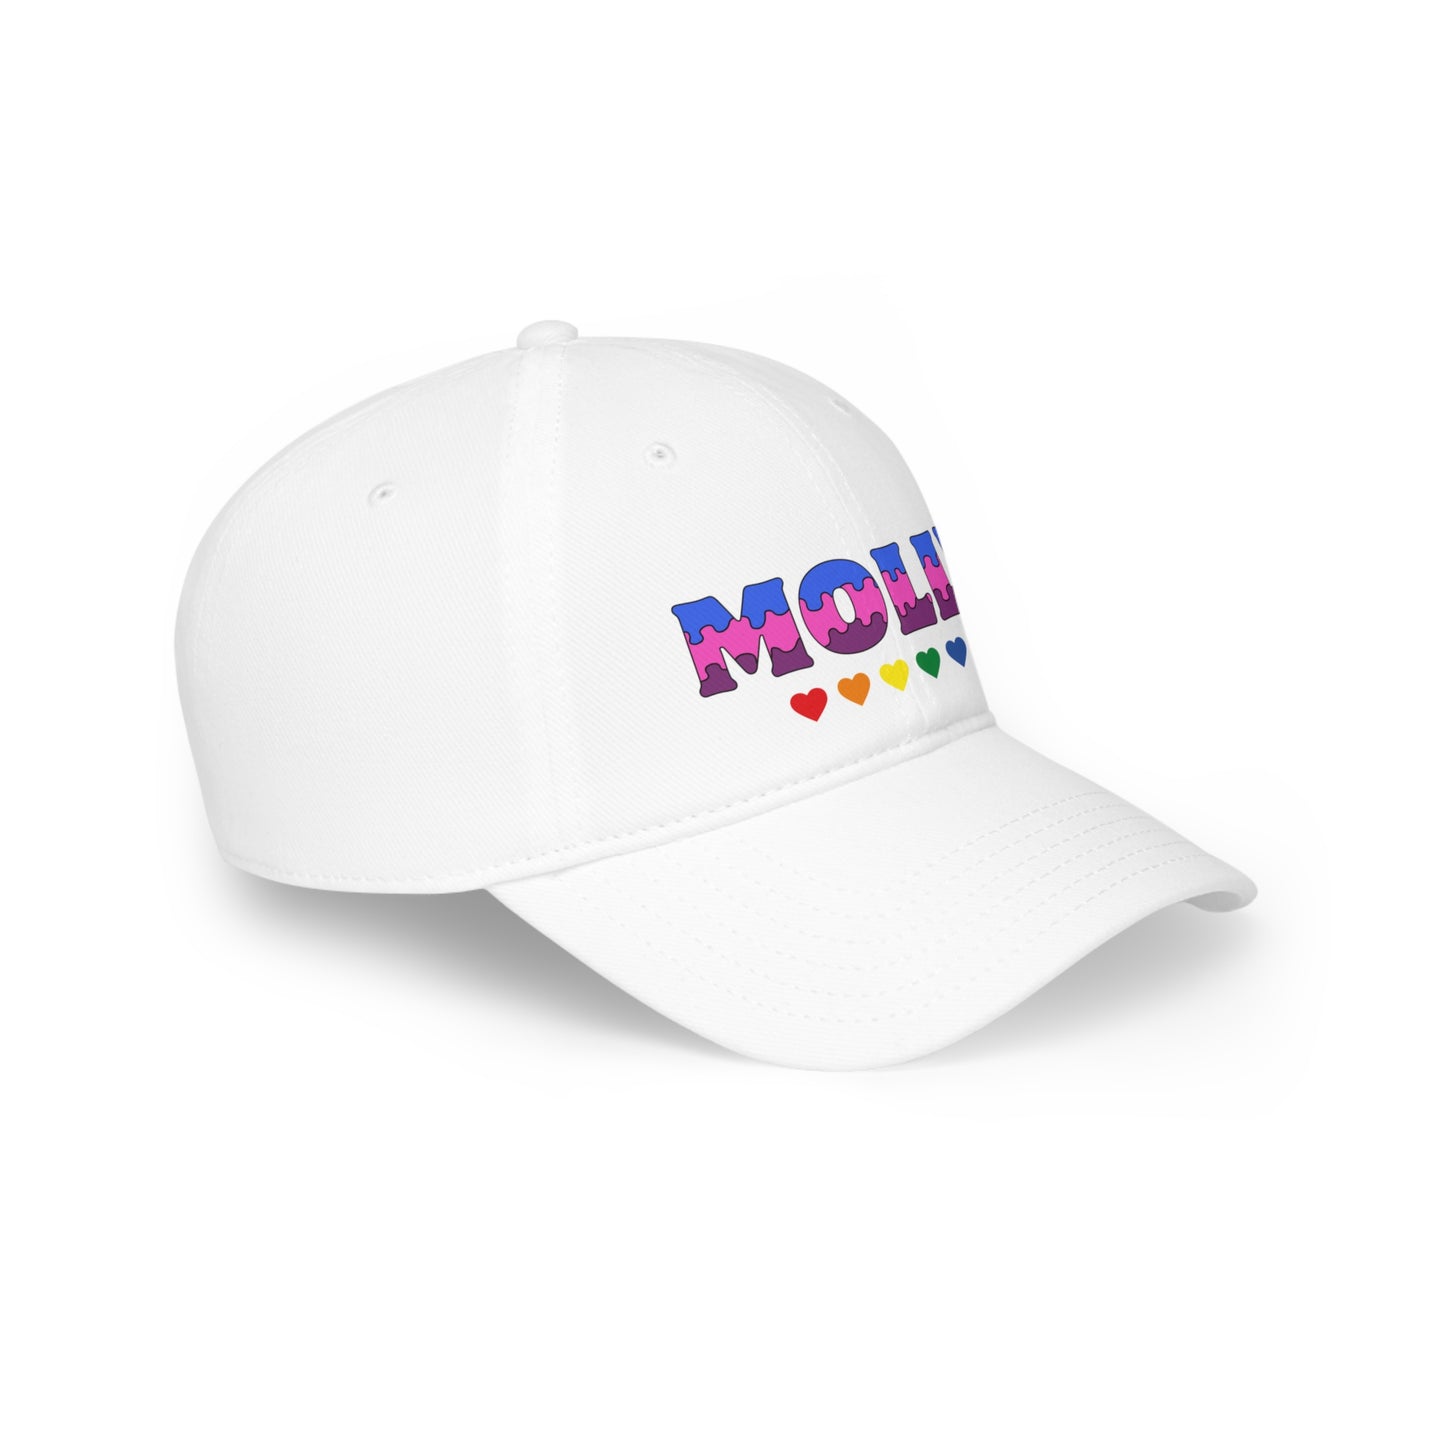 🧢✨ Baseball Cap featuring Molly